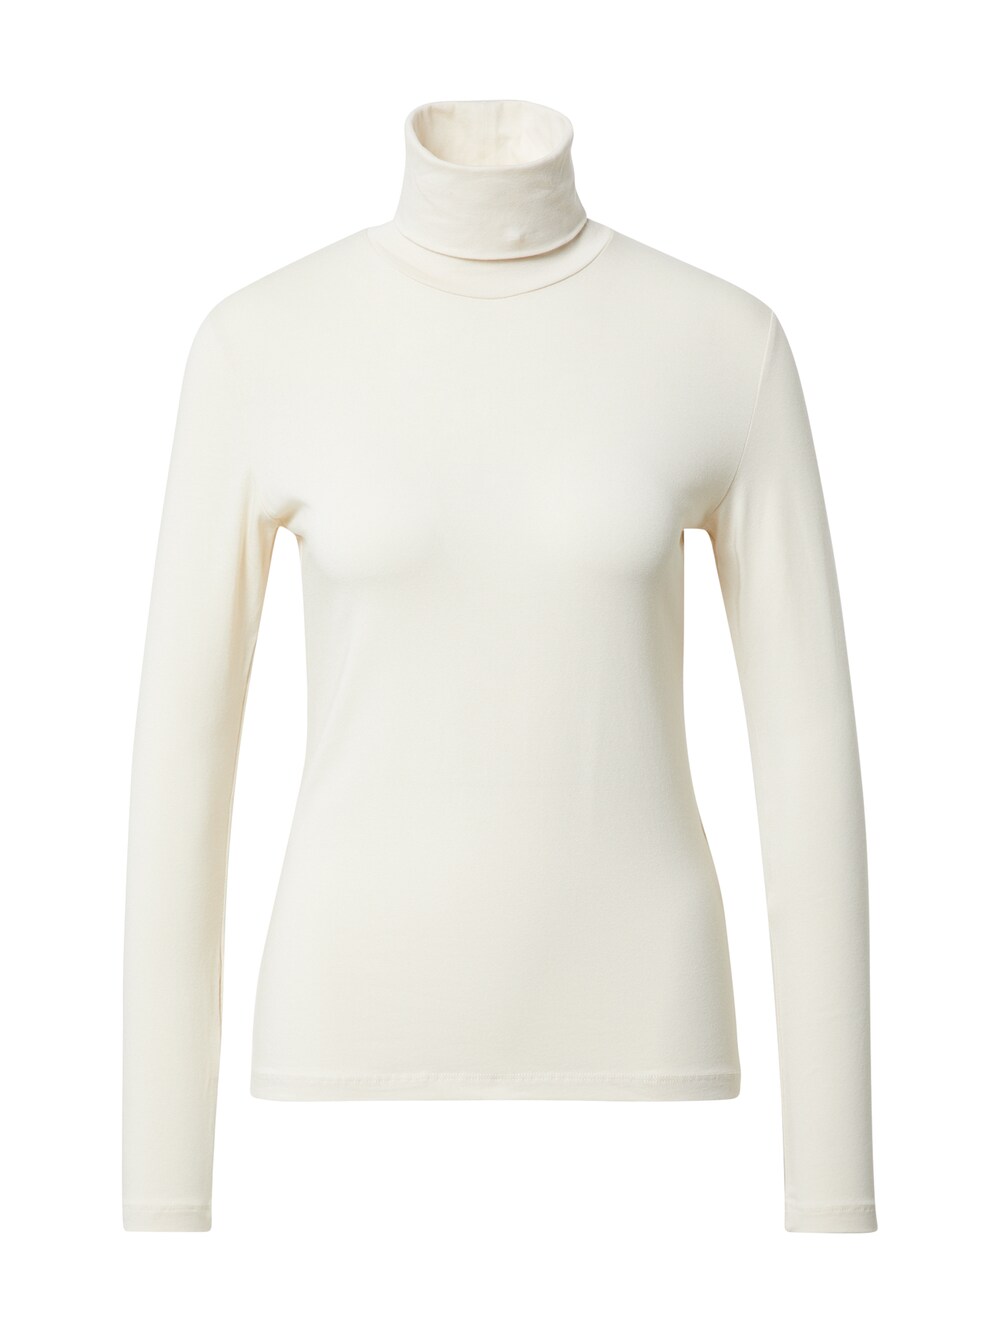 Рубашка Samsøe Samsøe, натуральный белый